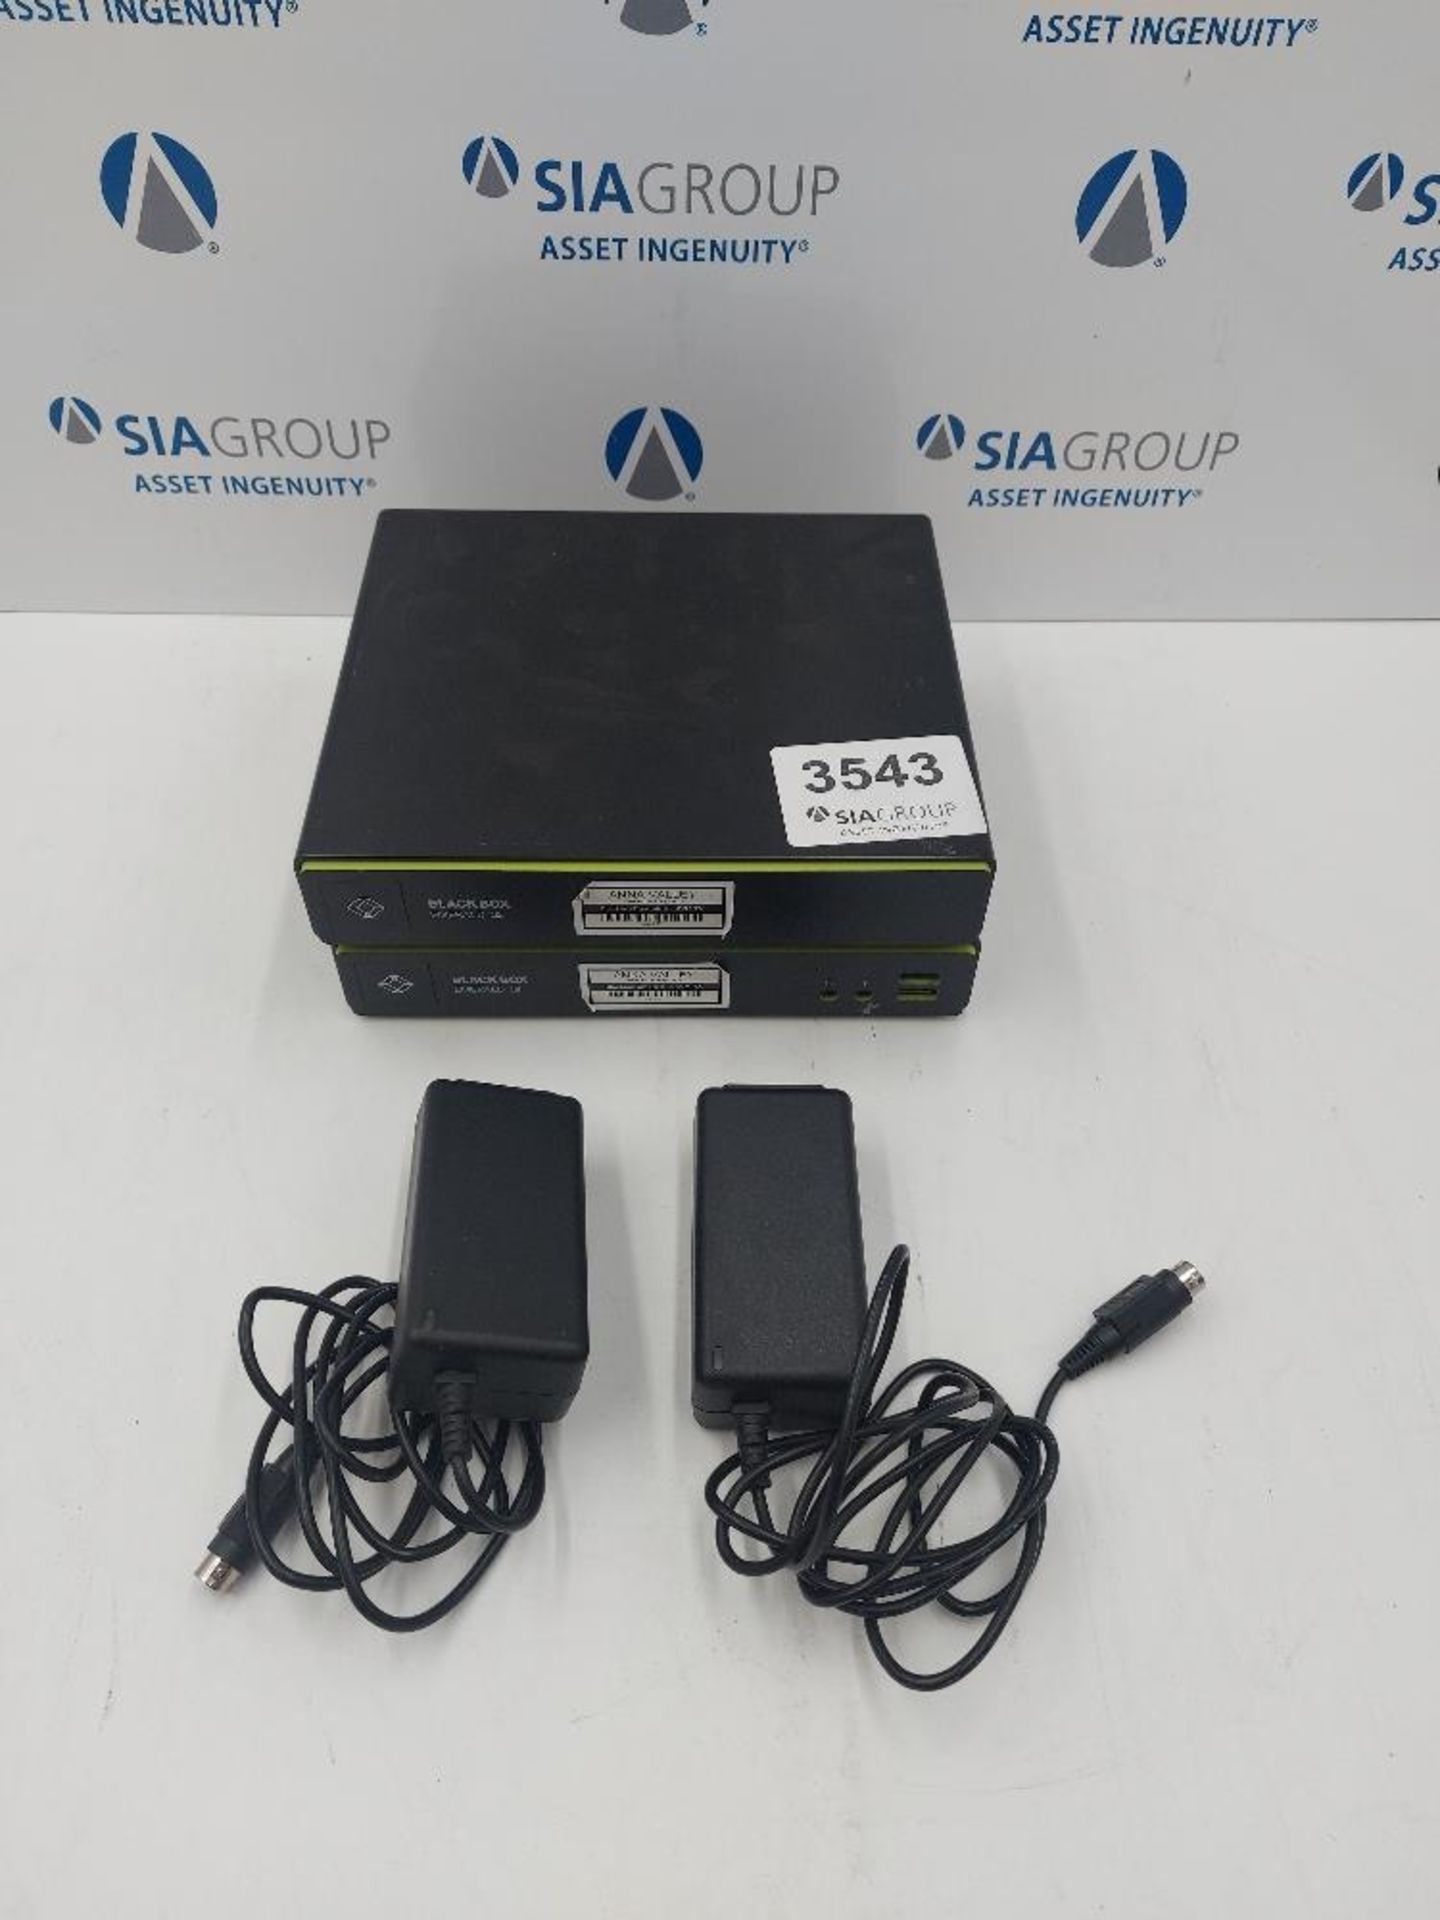 Blackbox Emerald 4k KVM Extender and Receiver